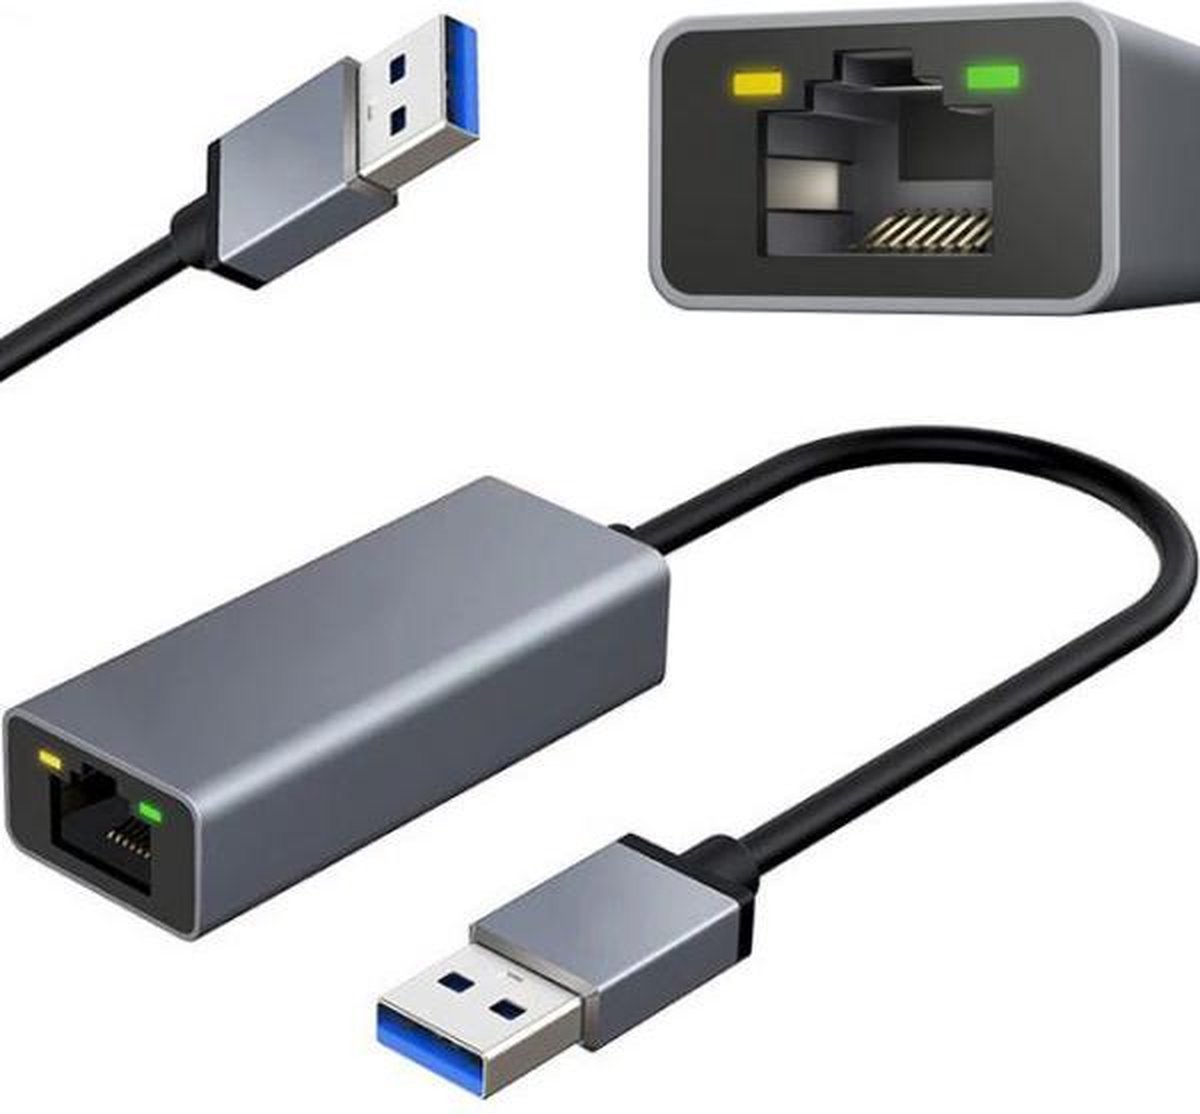 USB 3.0 naar RJ45 Internet Adapter 1000MB/s - Windows / Mac OS / Linux.